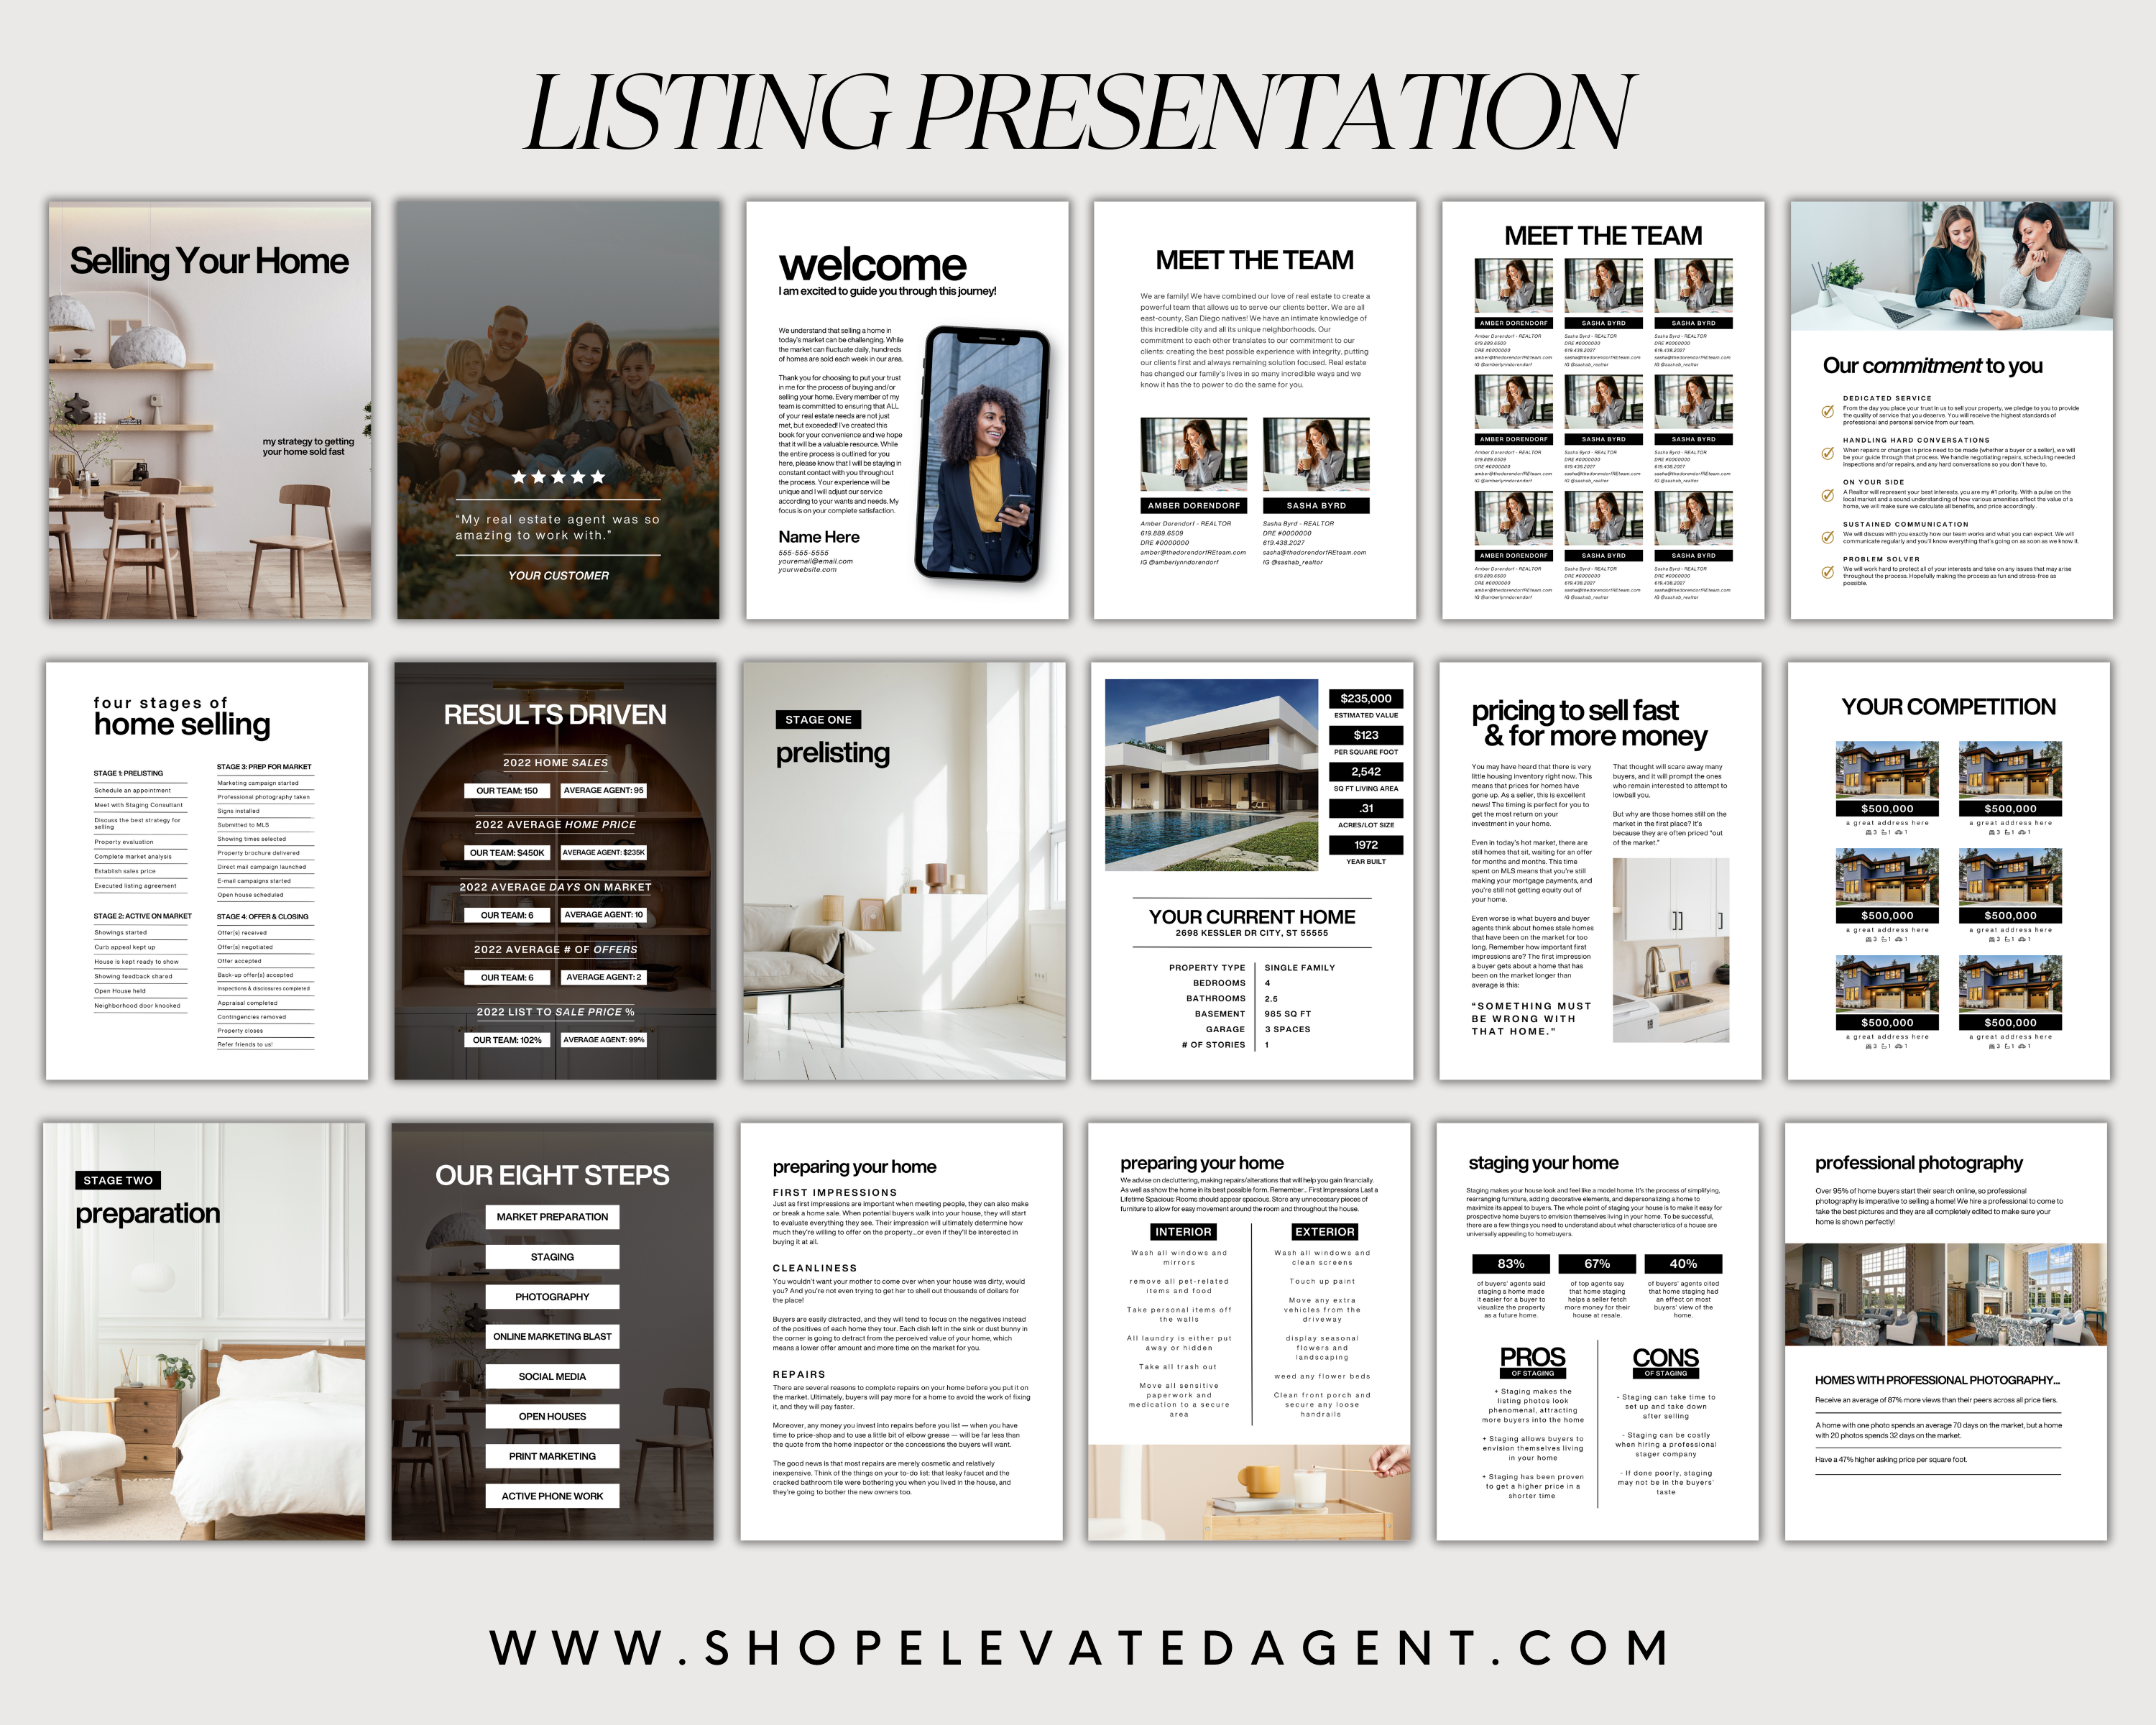 Buyer and Listing Presentation Bundle, Buyer Presentation, Home Seller Guide, Real Estate Farming, Buyer Guide, Real Estate Marketing